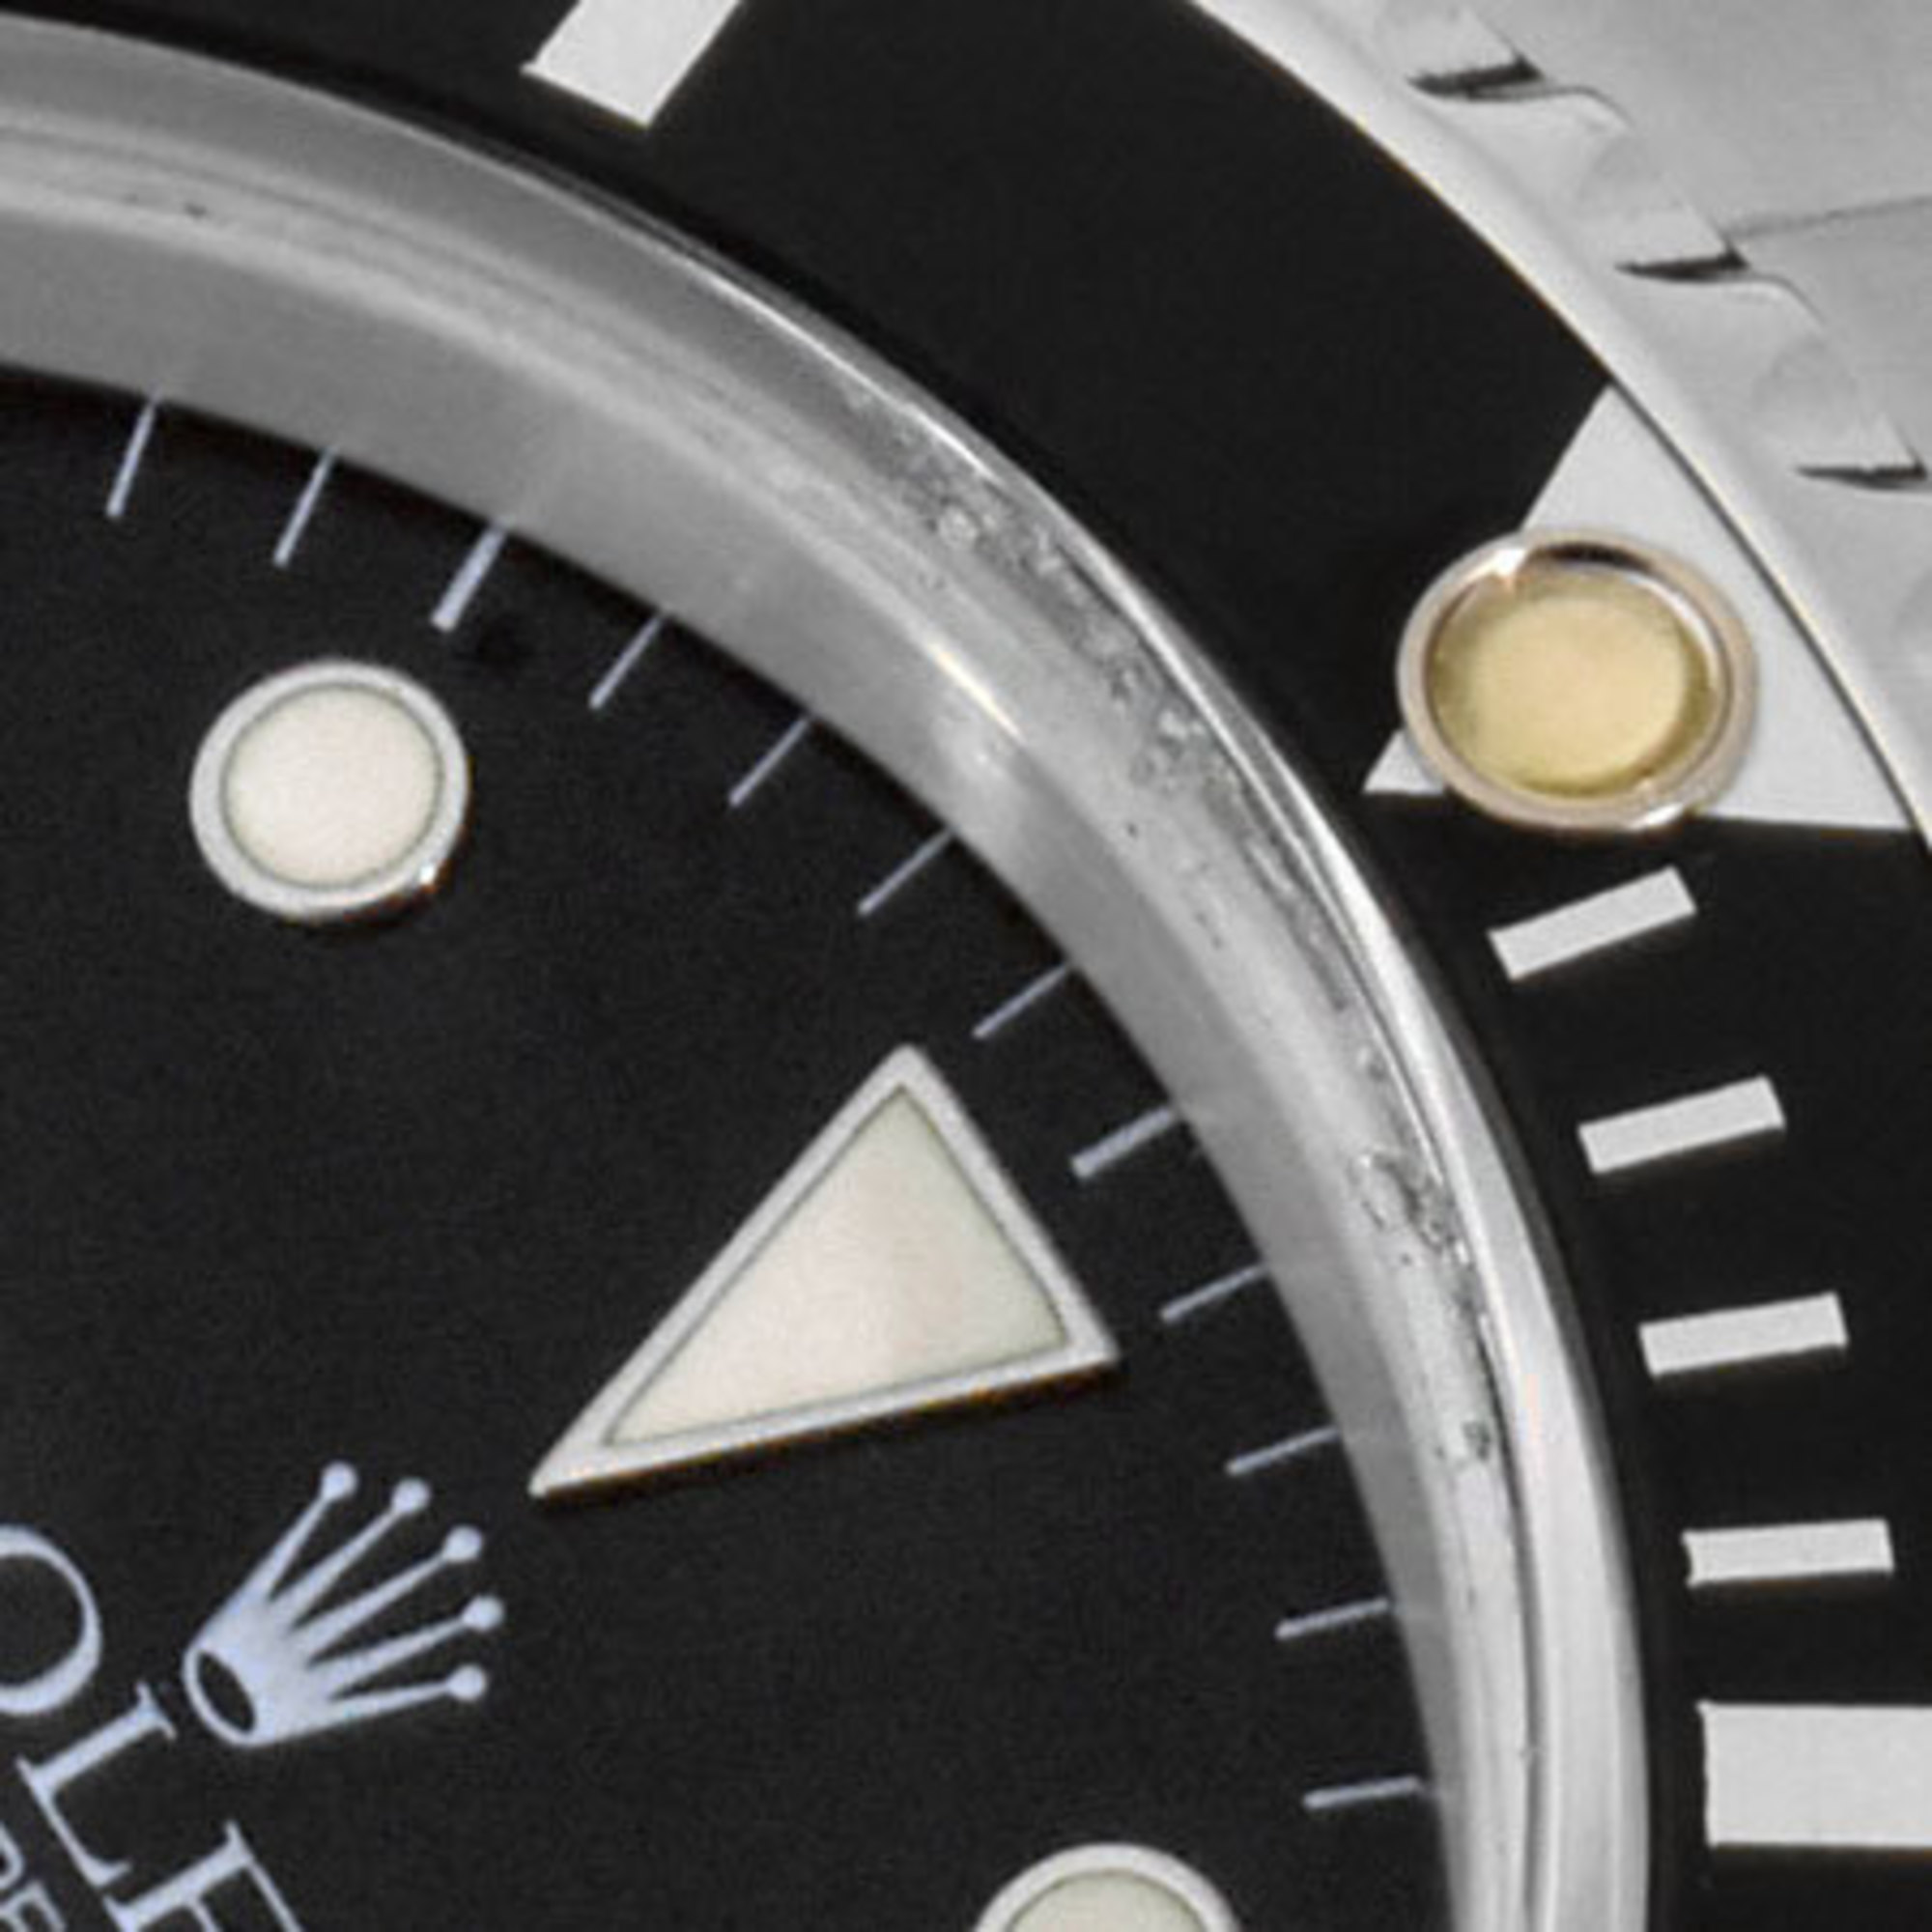 Rolex ROLEX Sea-Dweller 16600 U number SS men's wristwatch self-winding black dial